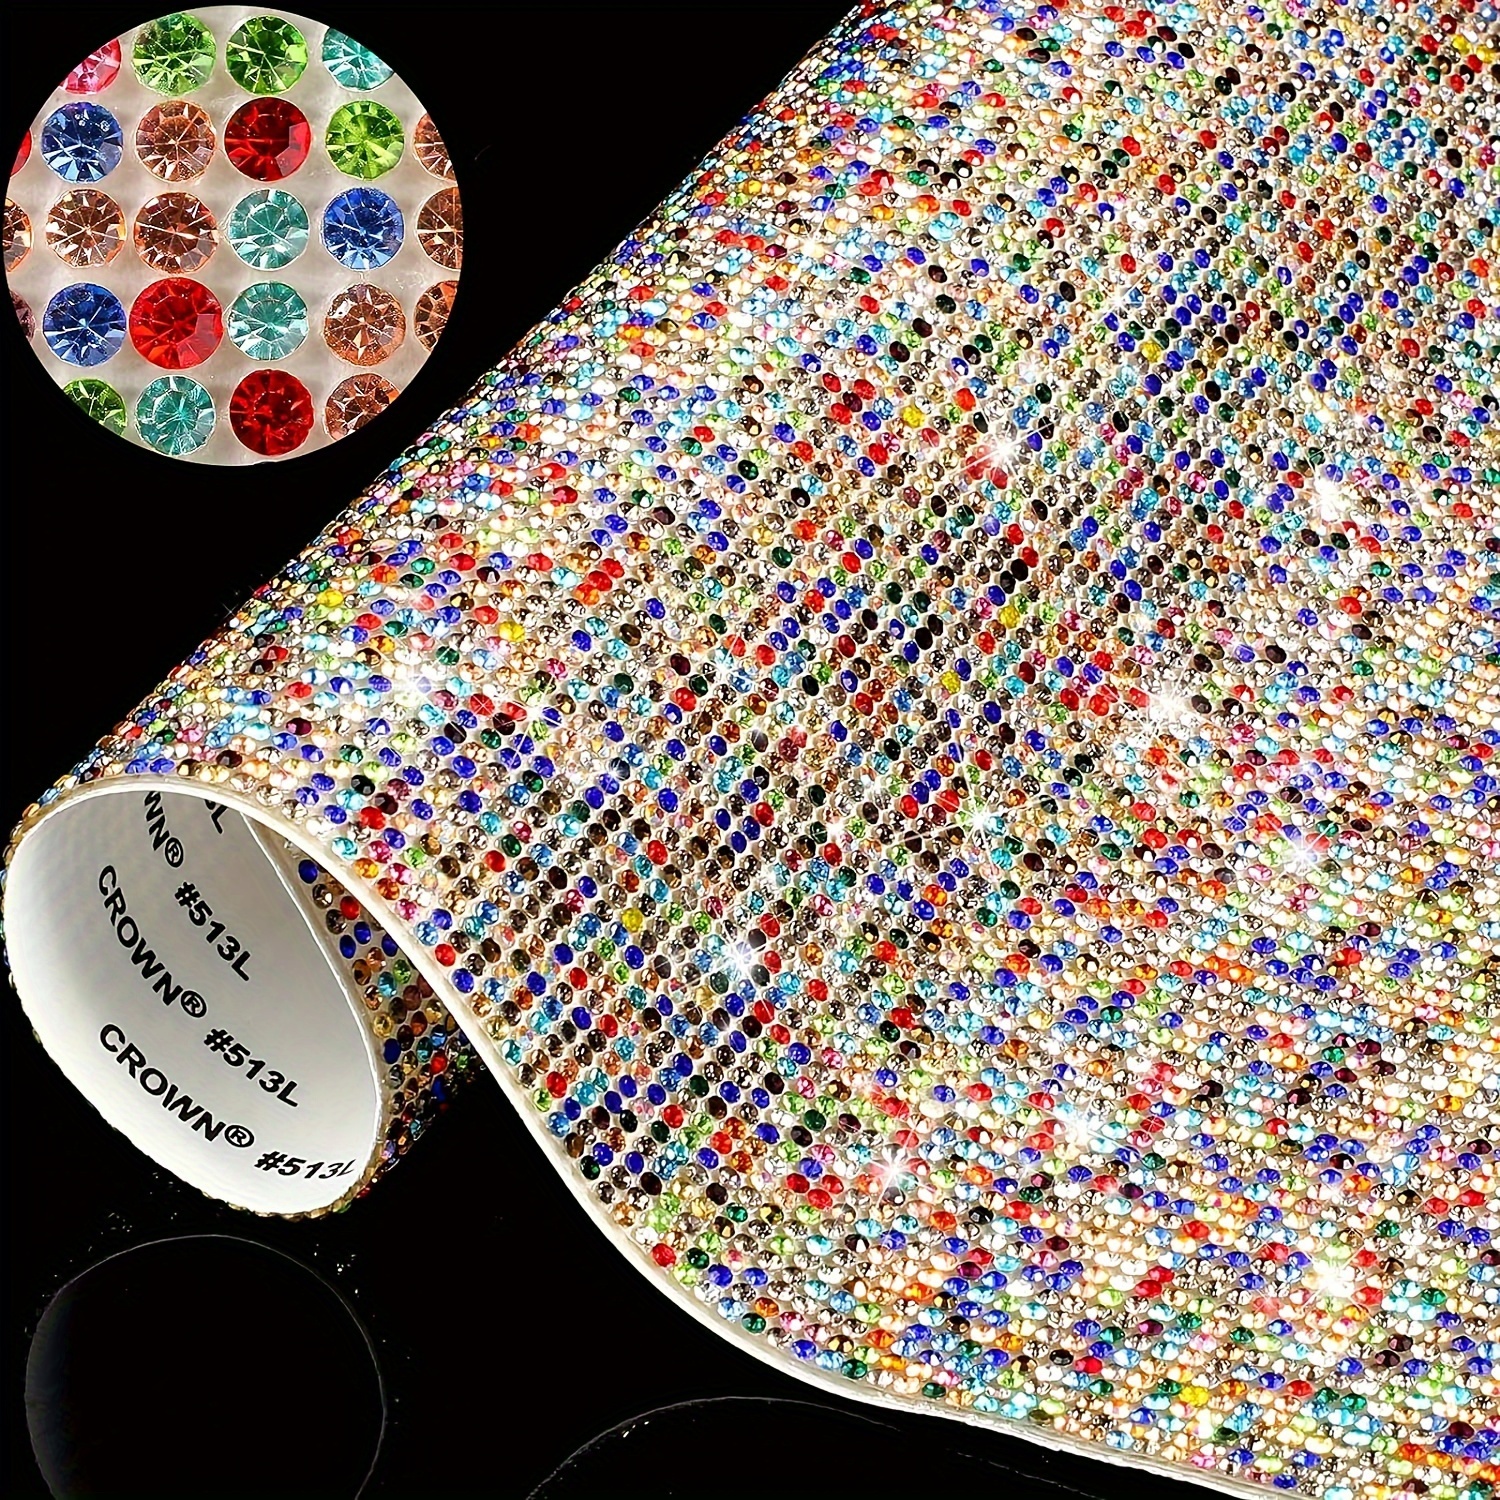 Kooda Home Rhinestone Self-Adhesive Sheet Sticker 15.75inchx9.45inch |  20400 Pieces 2mm Bright Crystal Gem | Bling DIY Home Car Decoration Arts  Crafts